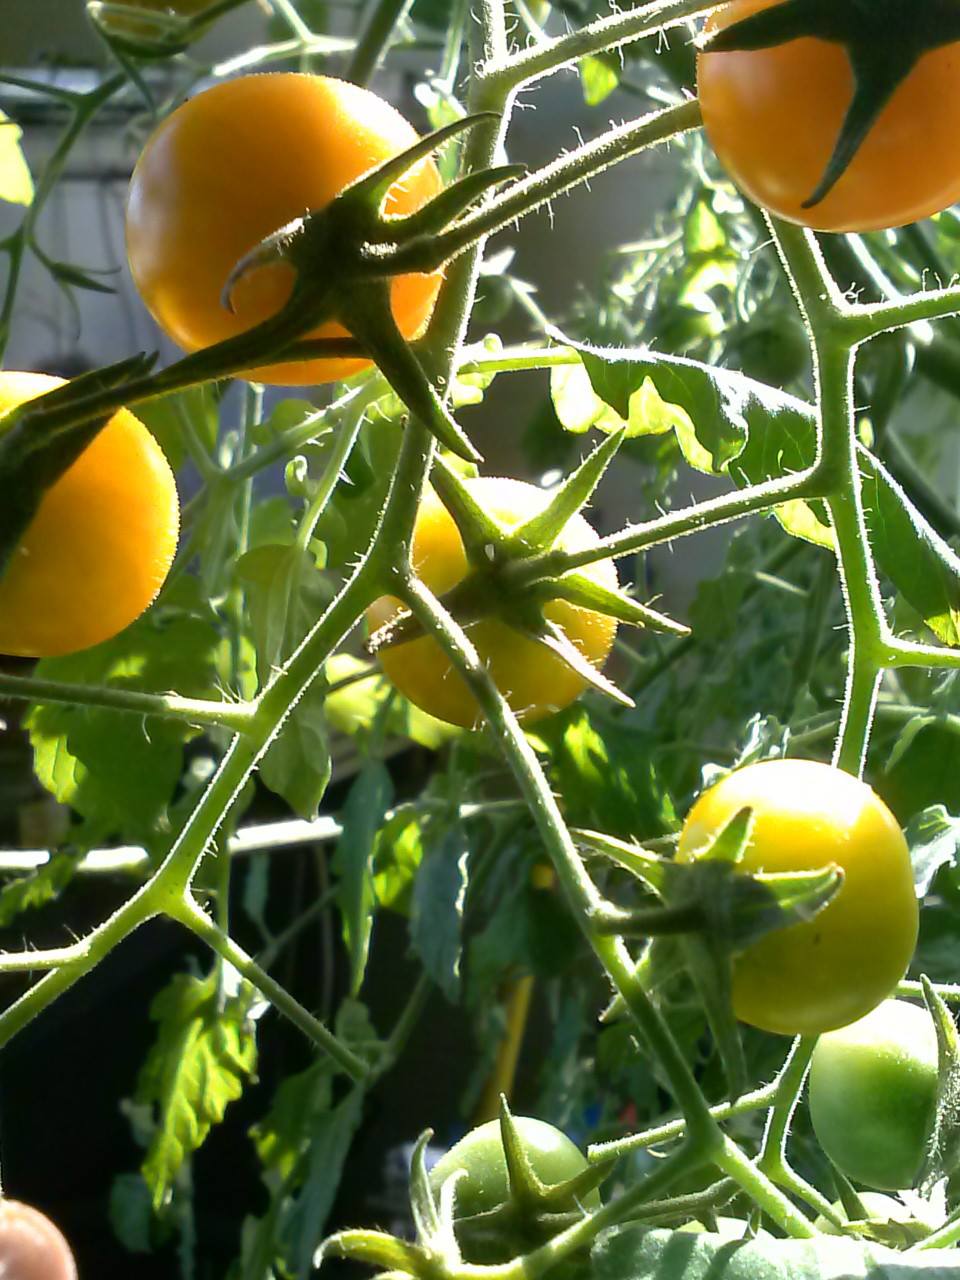 Yellow Cherry Tomato plant